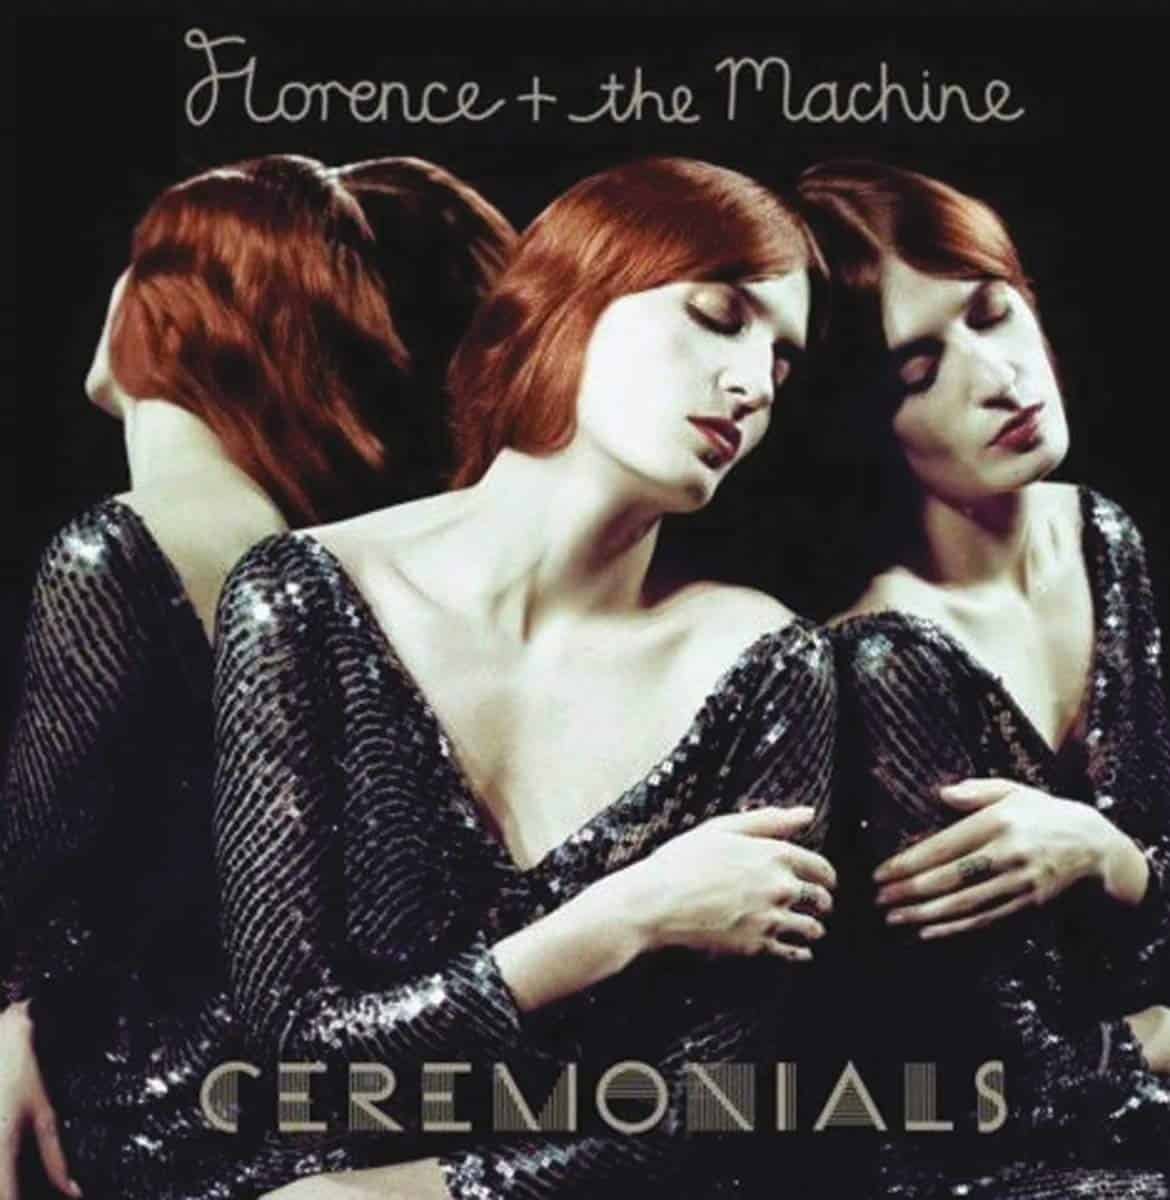 Florence-And-the-Machine-Ceremonials-LP-vinyl-record-album-front